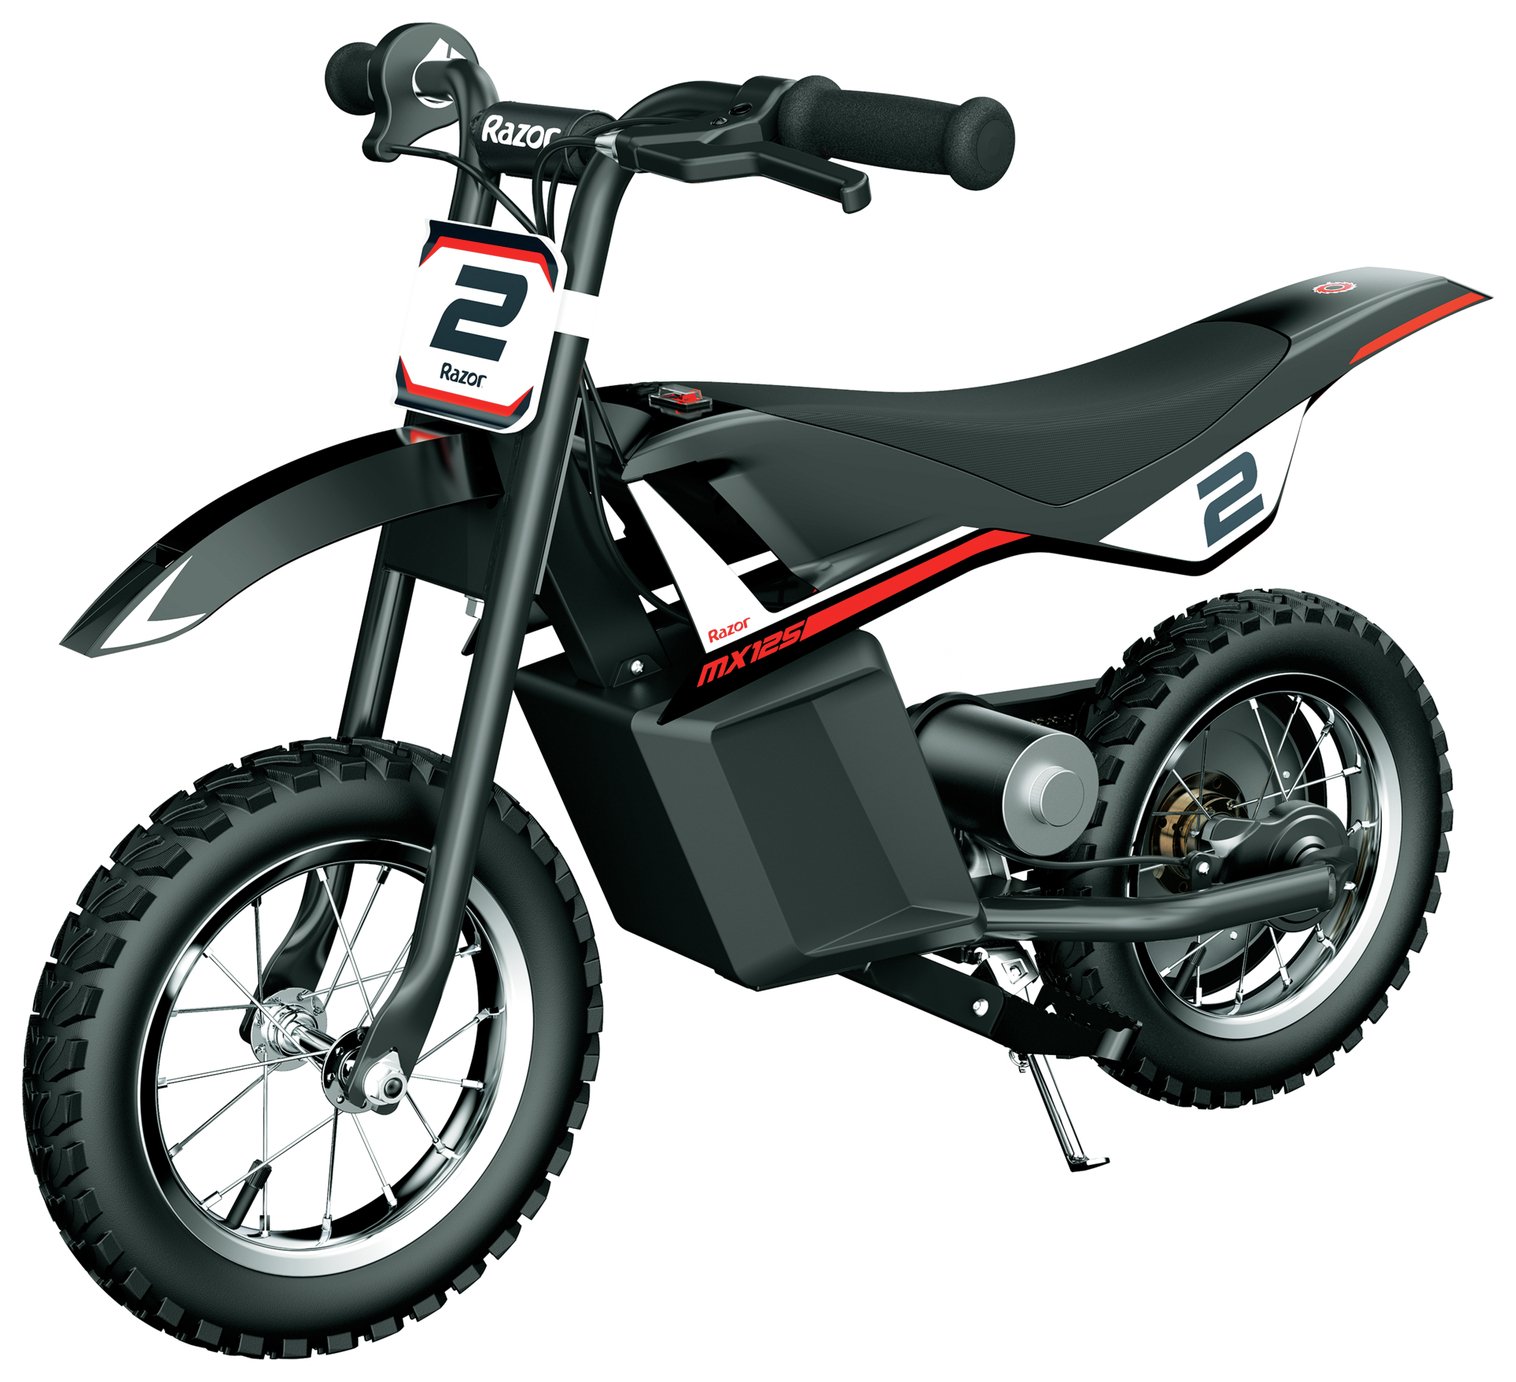 Razor MX125 Electric Dirt Bike Motorbike For Kids - Black